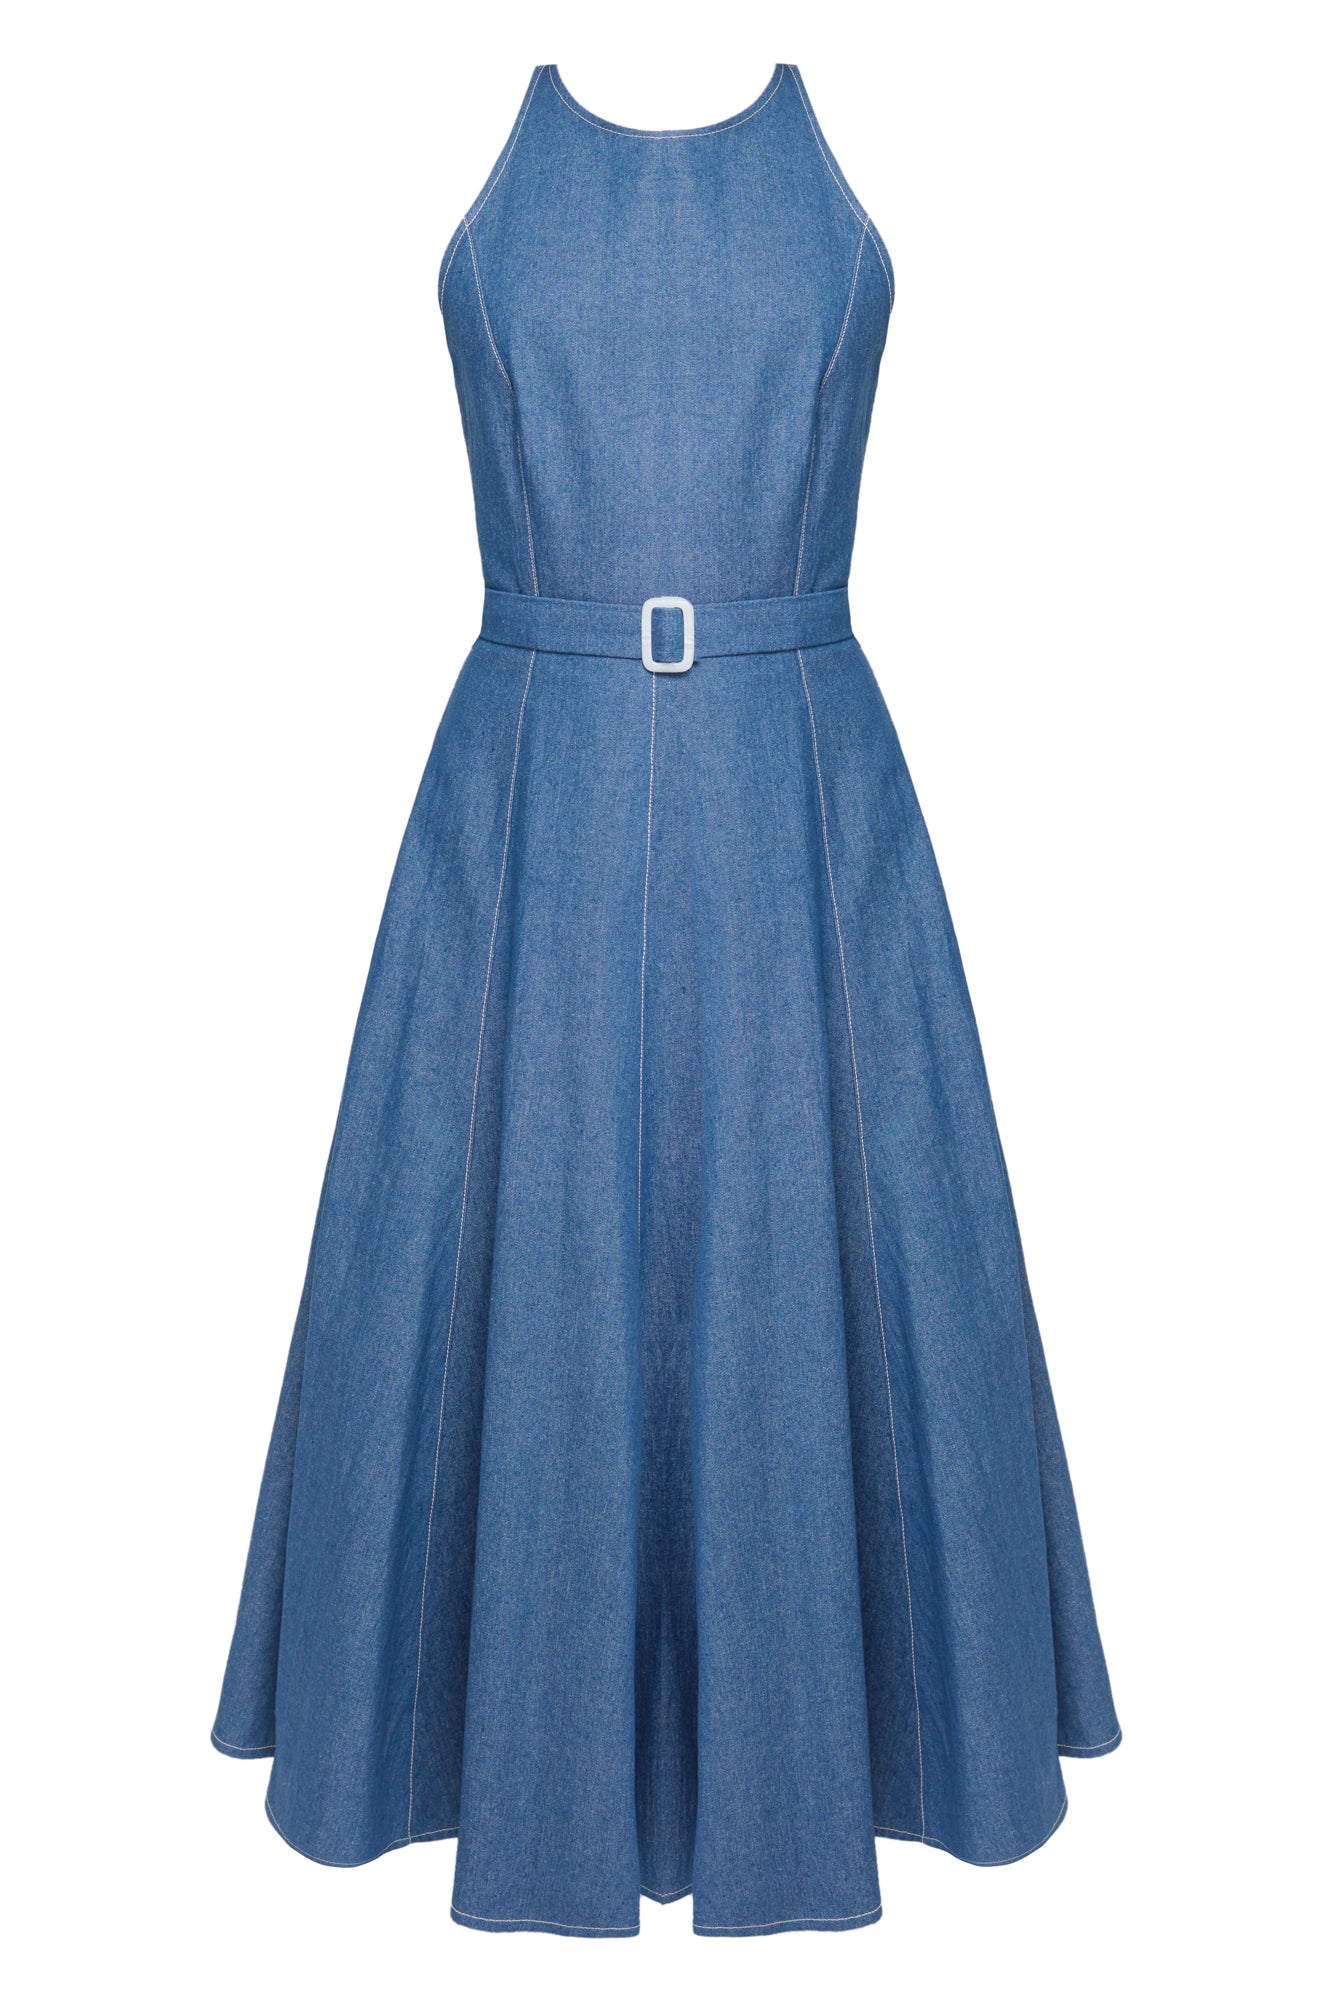 Women’s Ode Classy Blue Denim Godet Midi Dress Large Undress